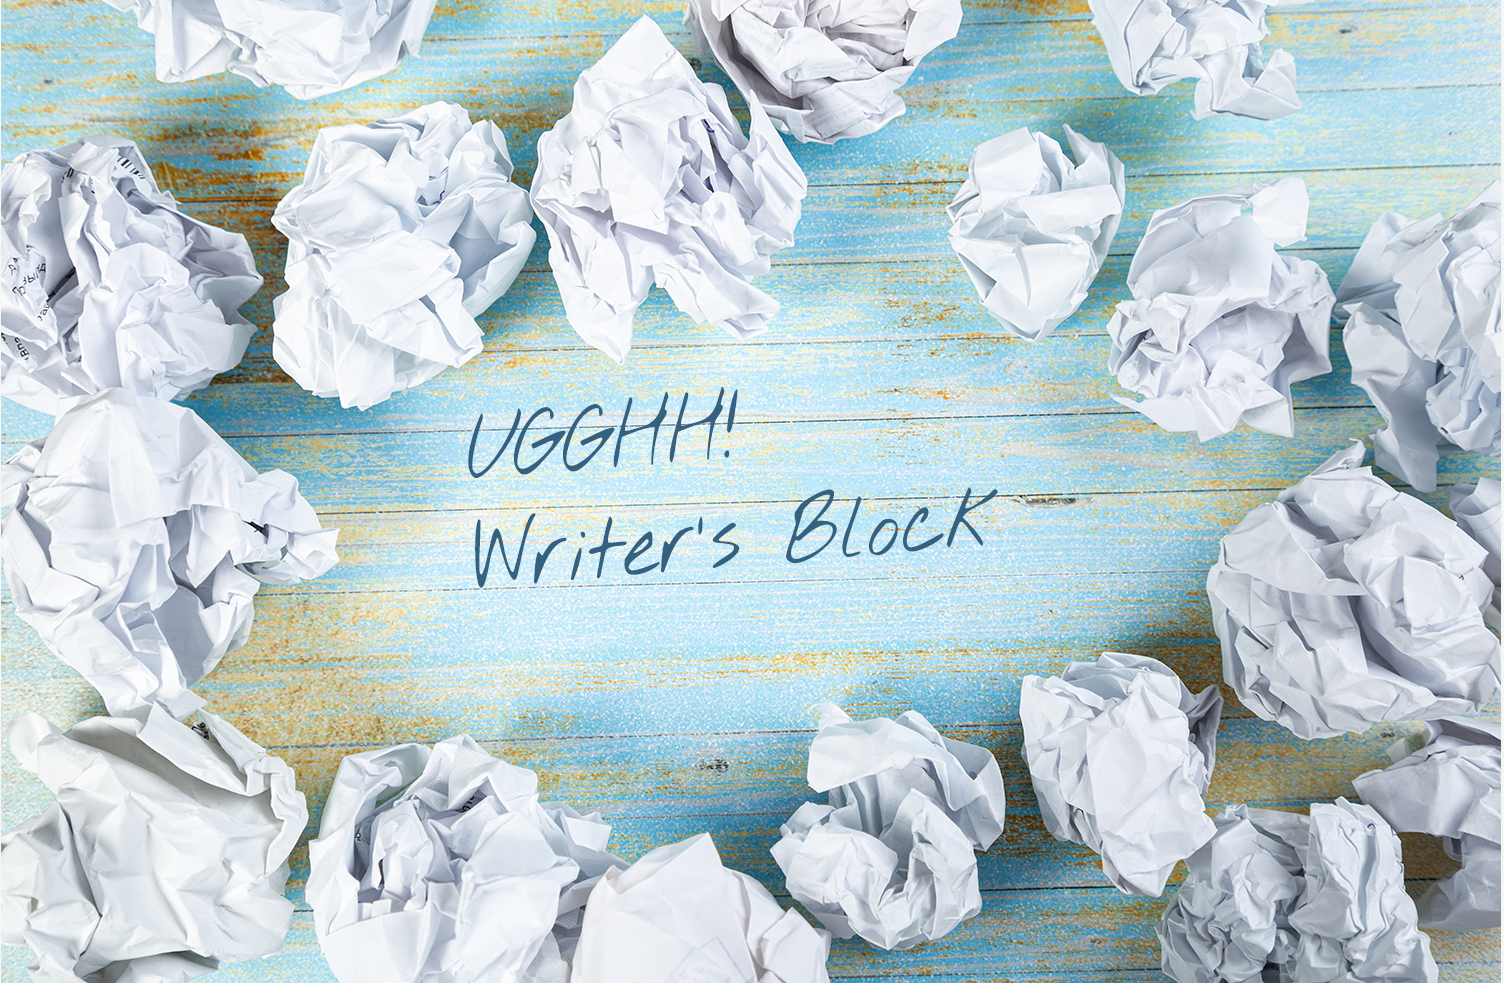 Top 5 Ways to Overcome Blogging Writer’s Block